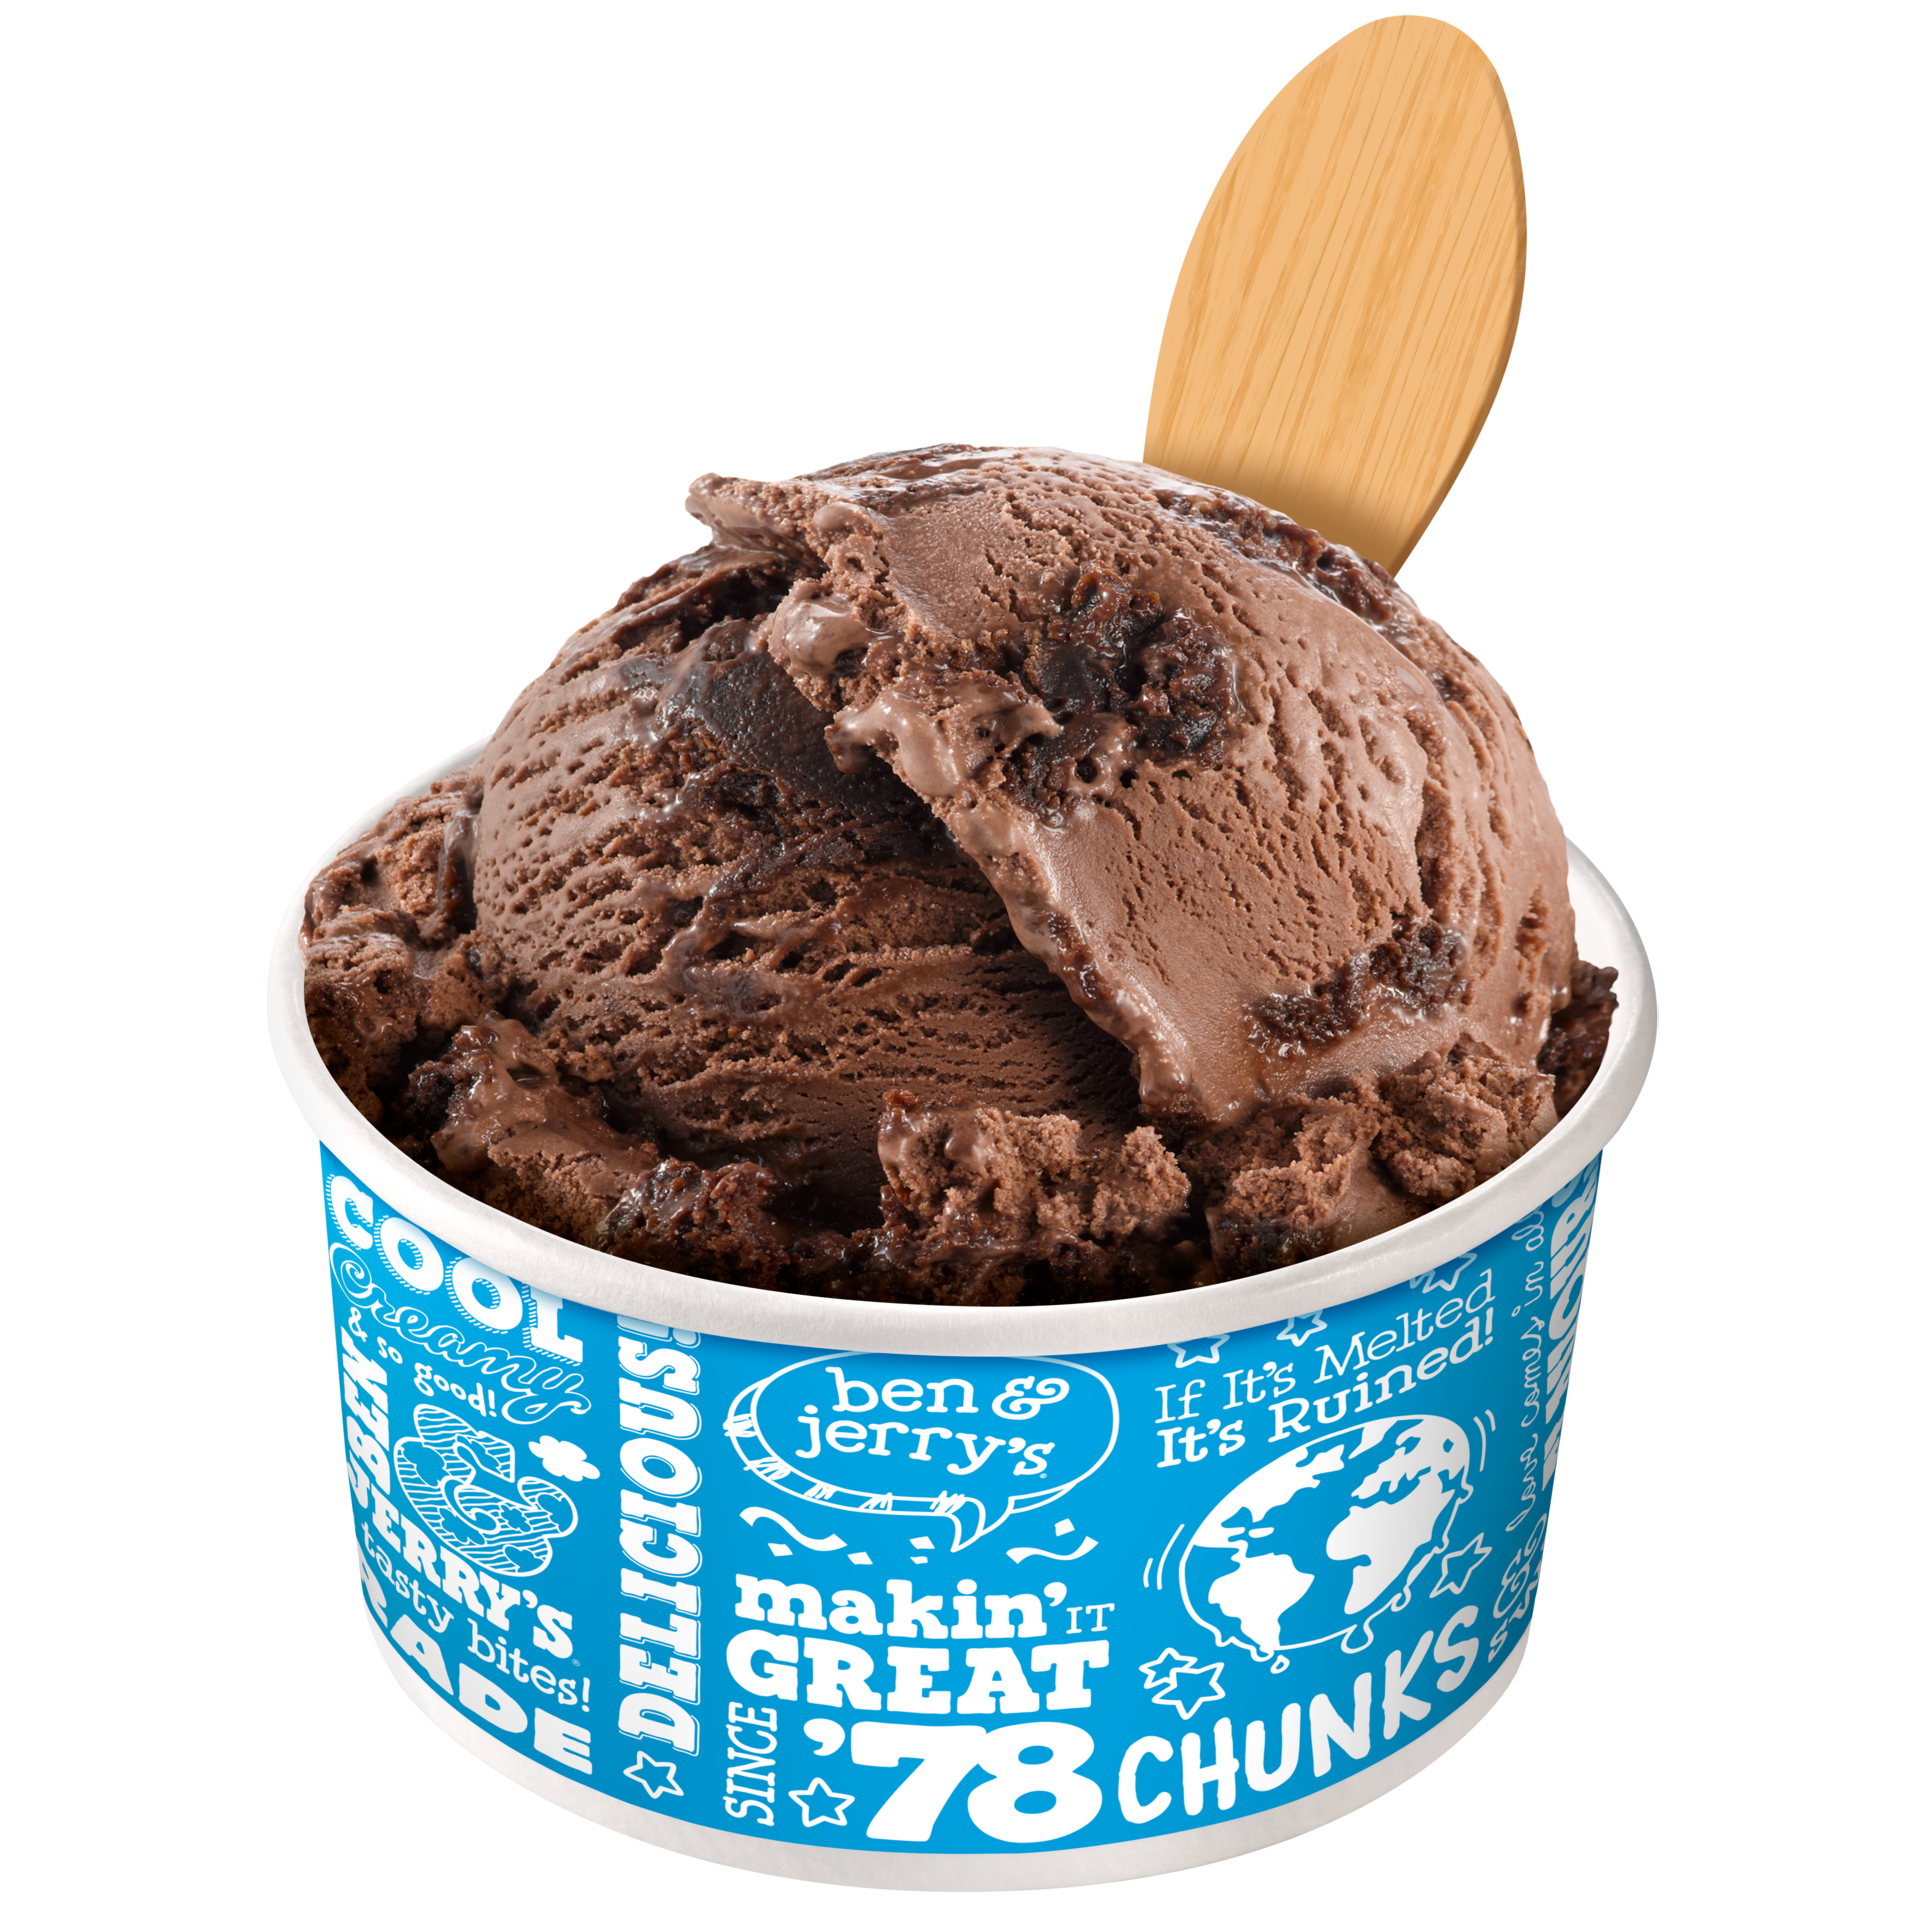 Chocolate Fudge Brownie Original Ice Cream in Scoop Shops